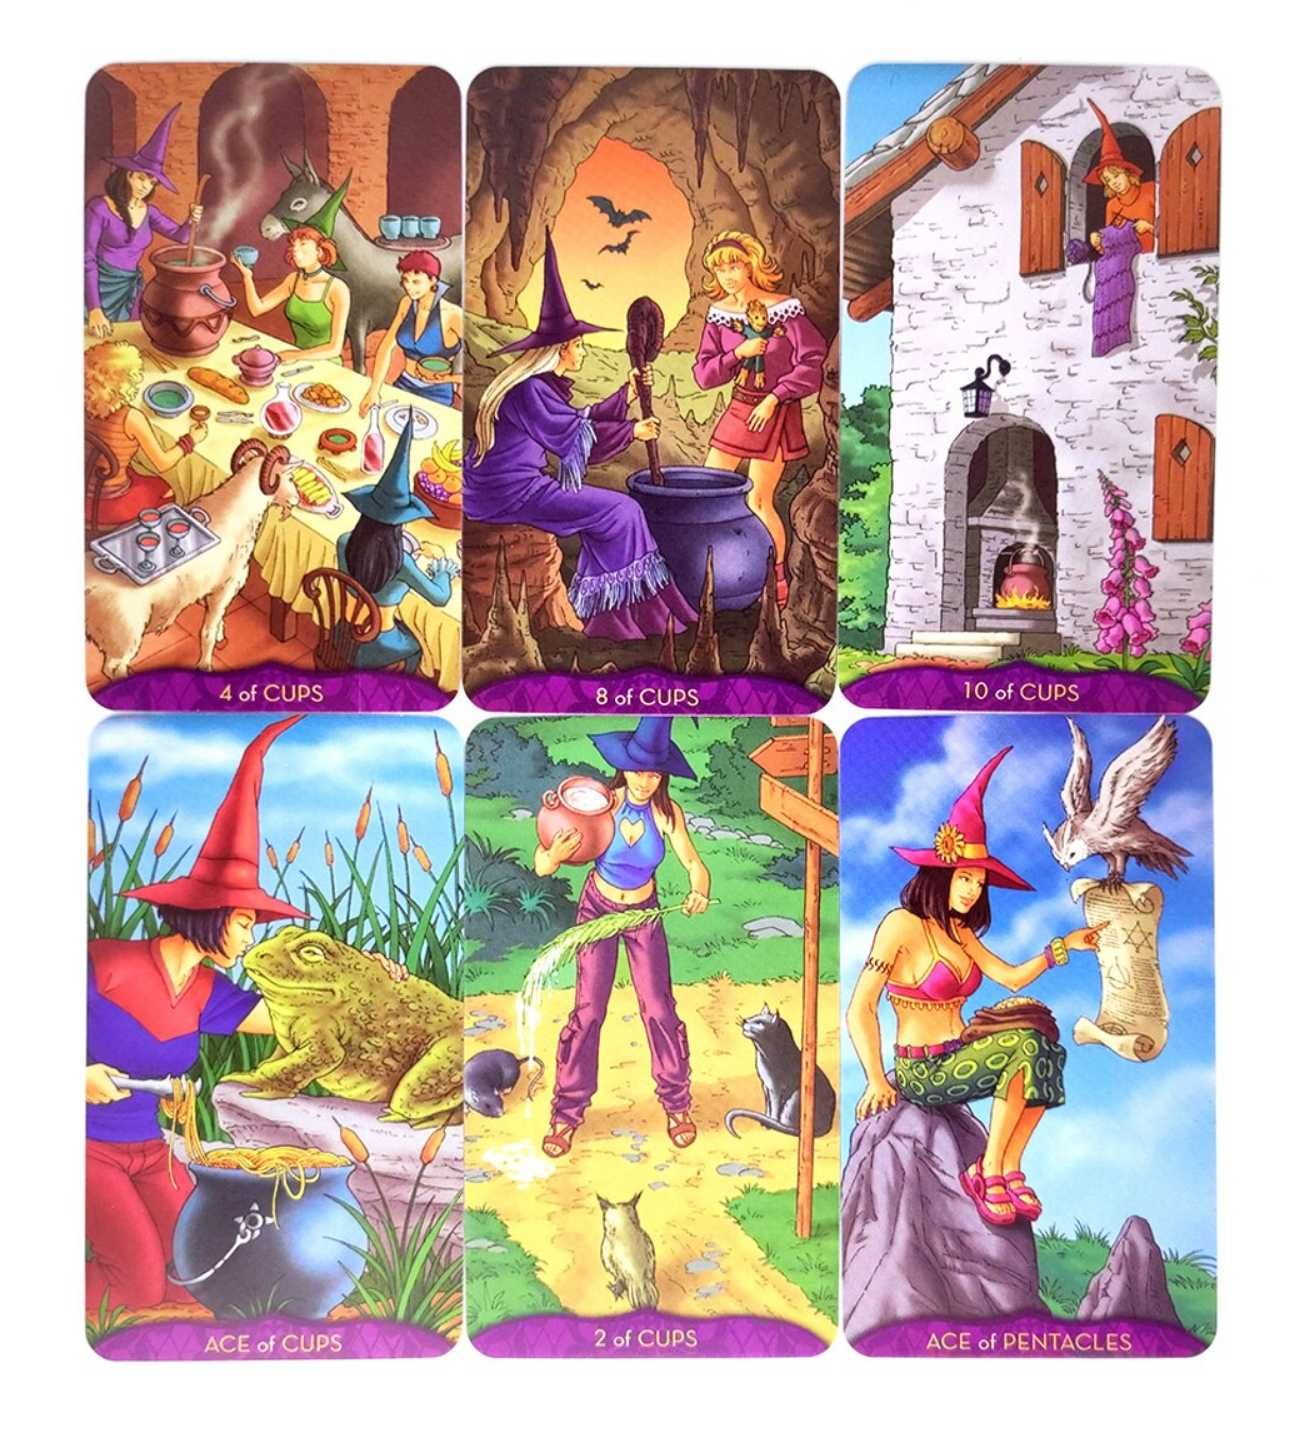 Таро: Silver Witchcraft Tarot & Modern Witch Tarot & Teen Witch Tarot